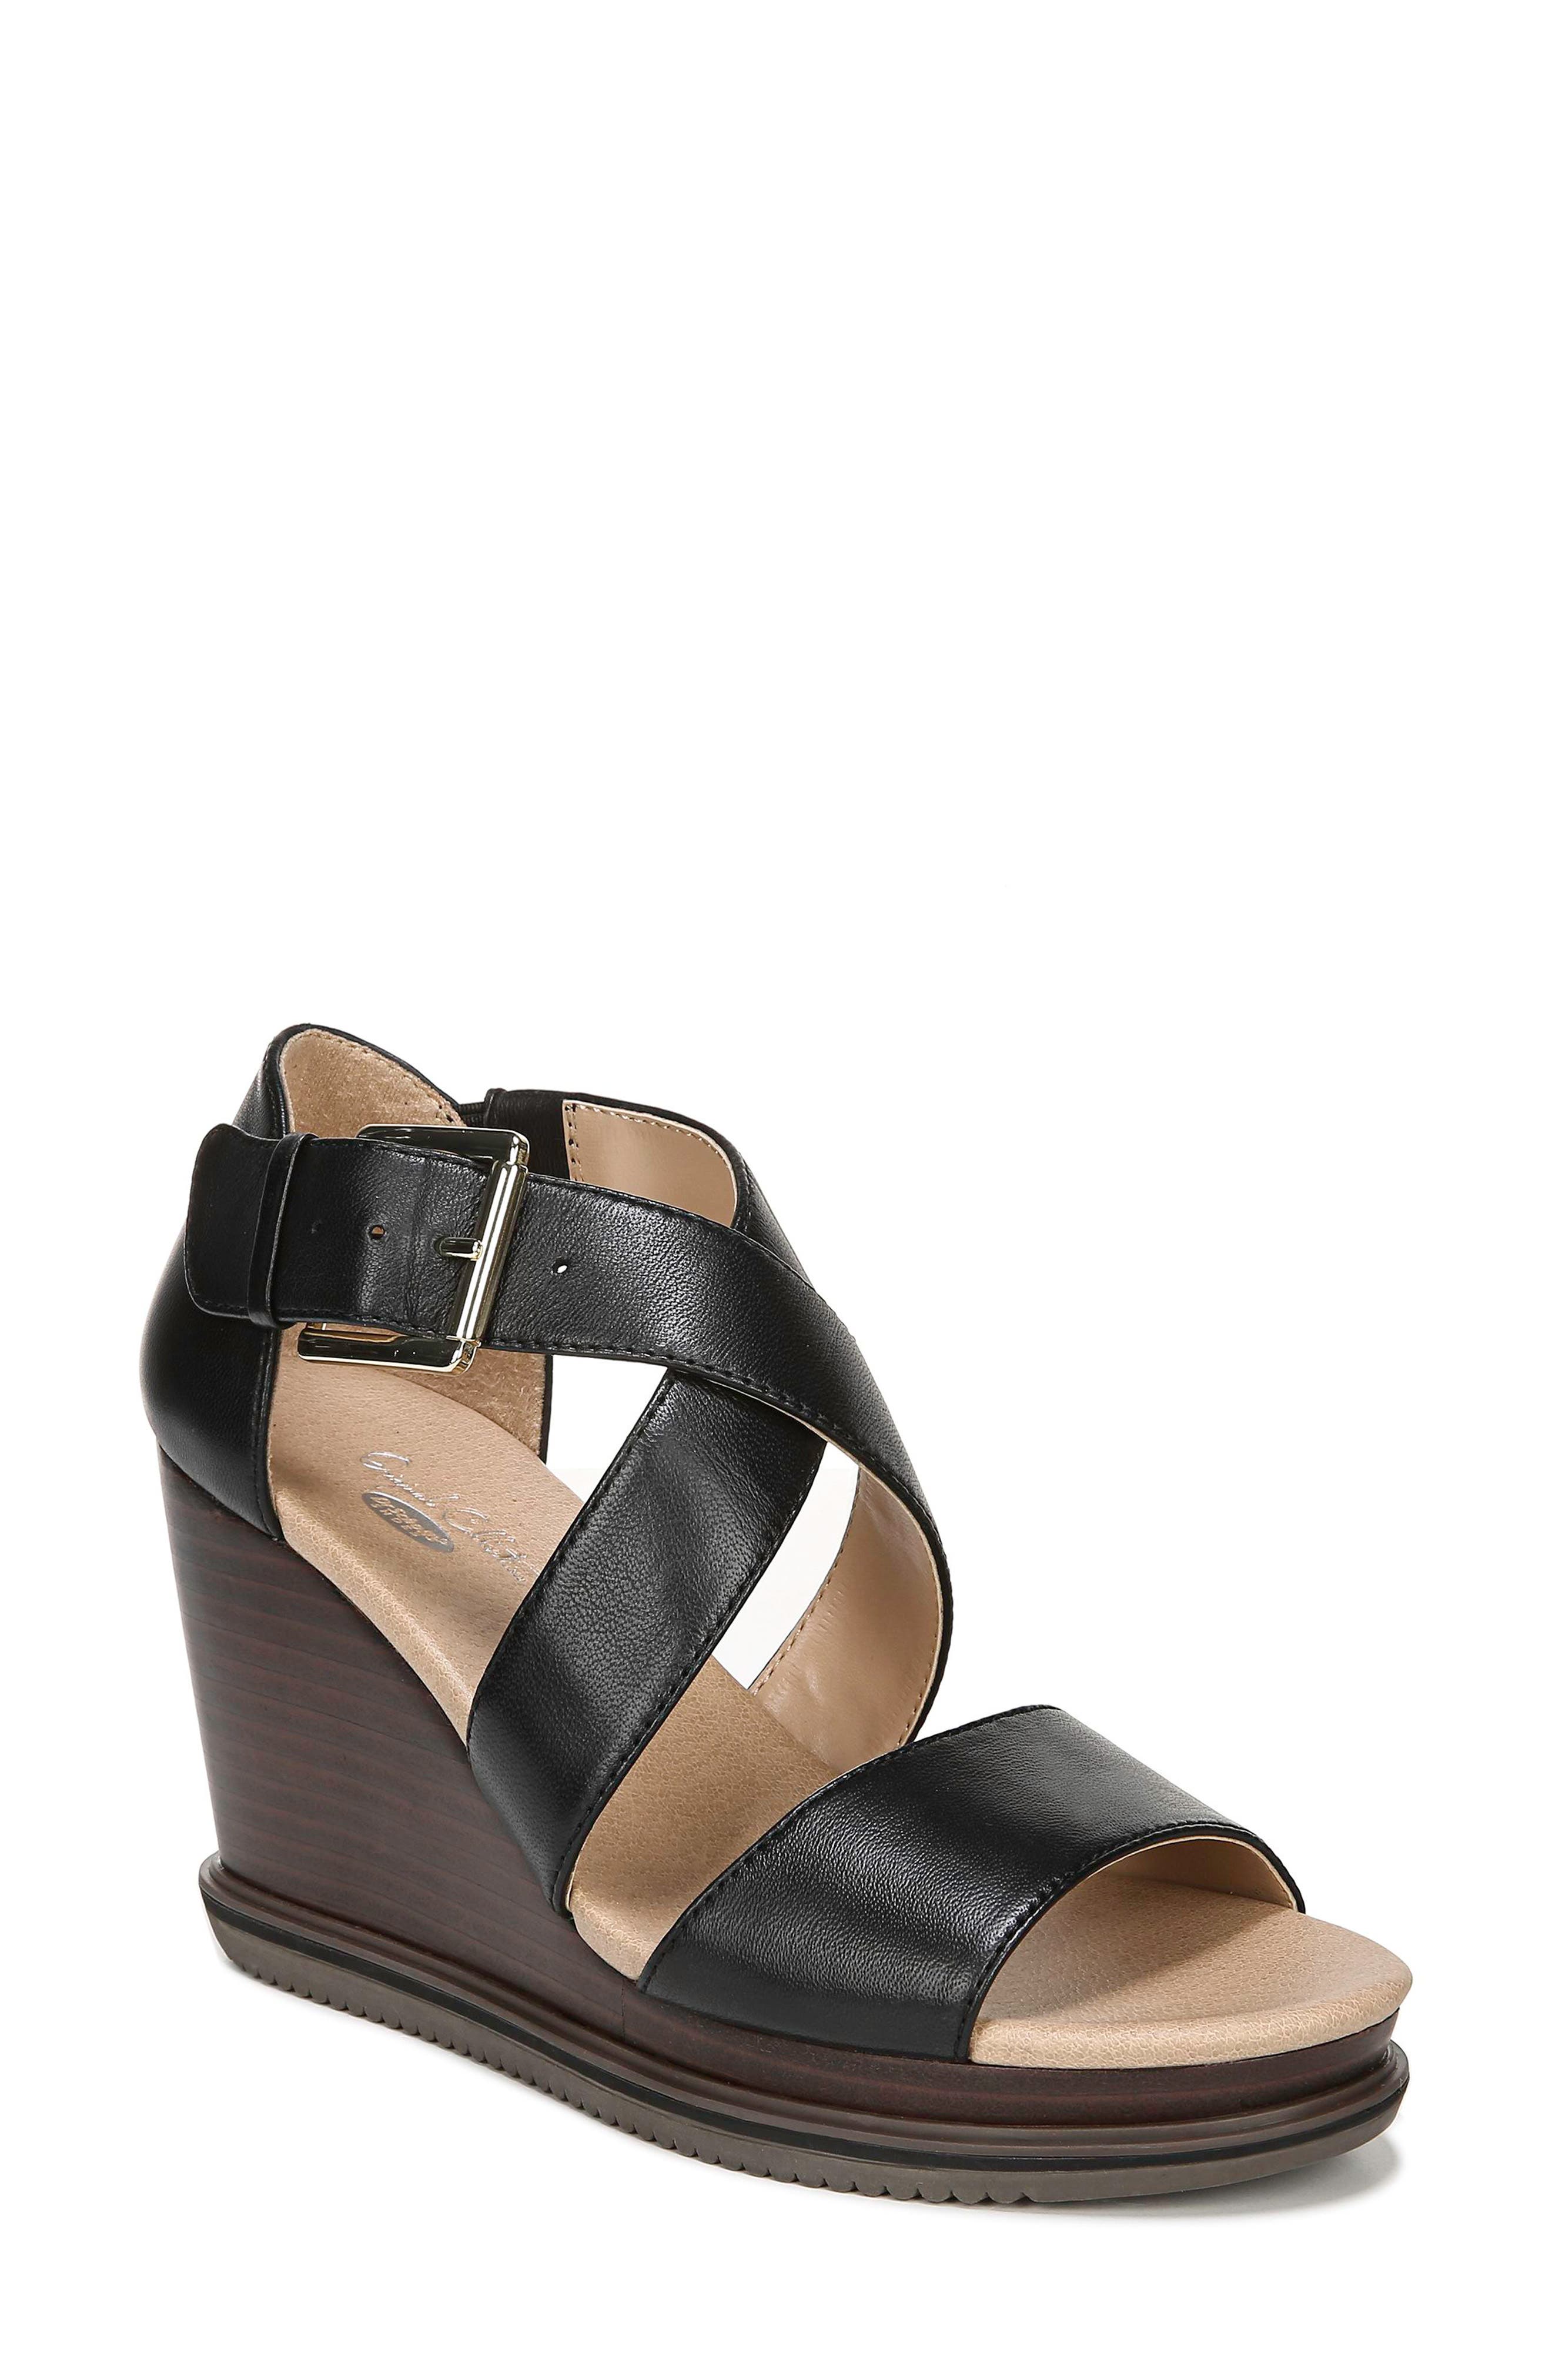 UPC 742976000041 product image for Women's Dr. Scholl's Sweet Escape Wedge Sandal, Size 6 M - Black | upcitemdb.com